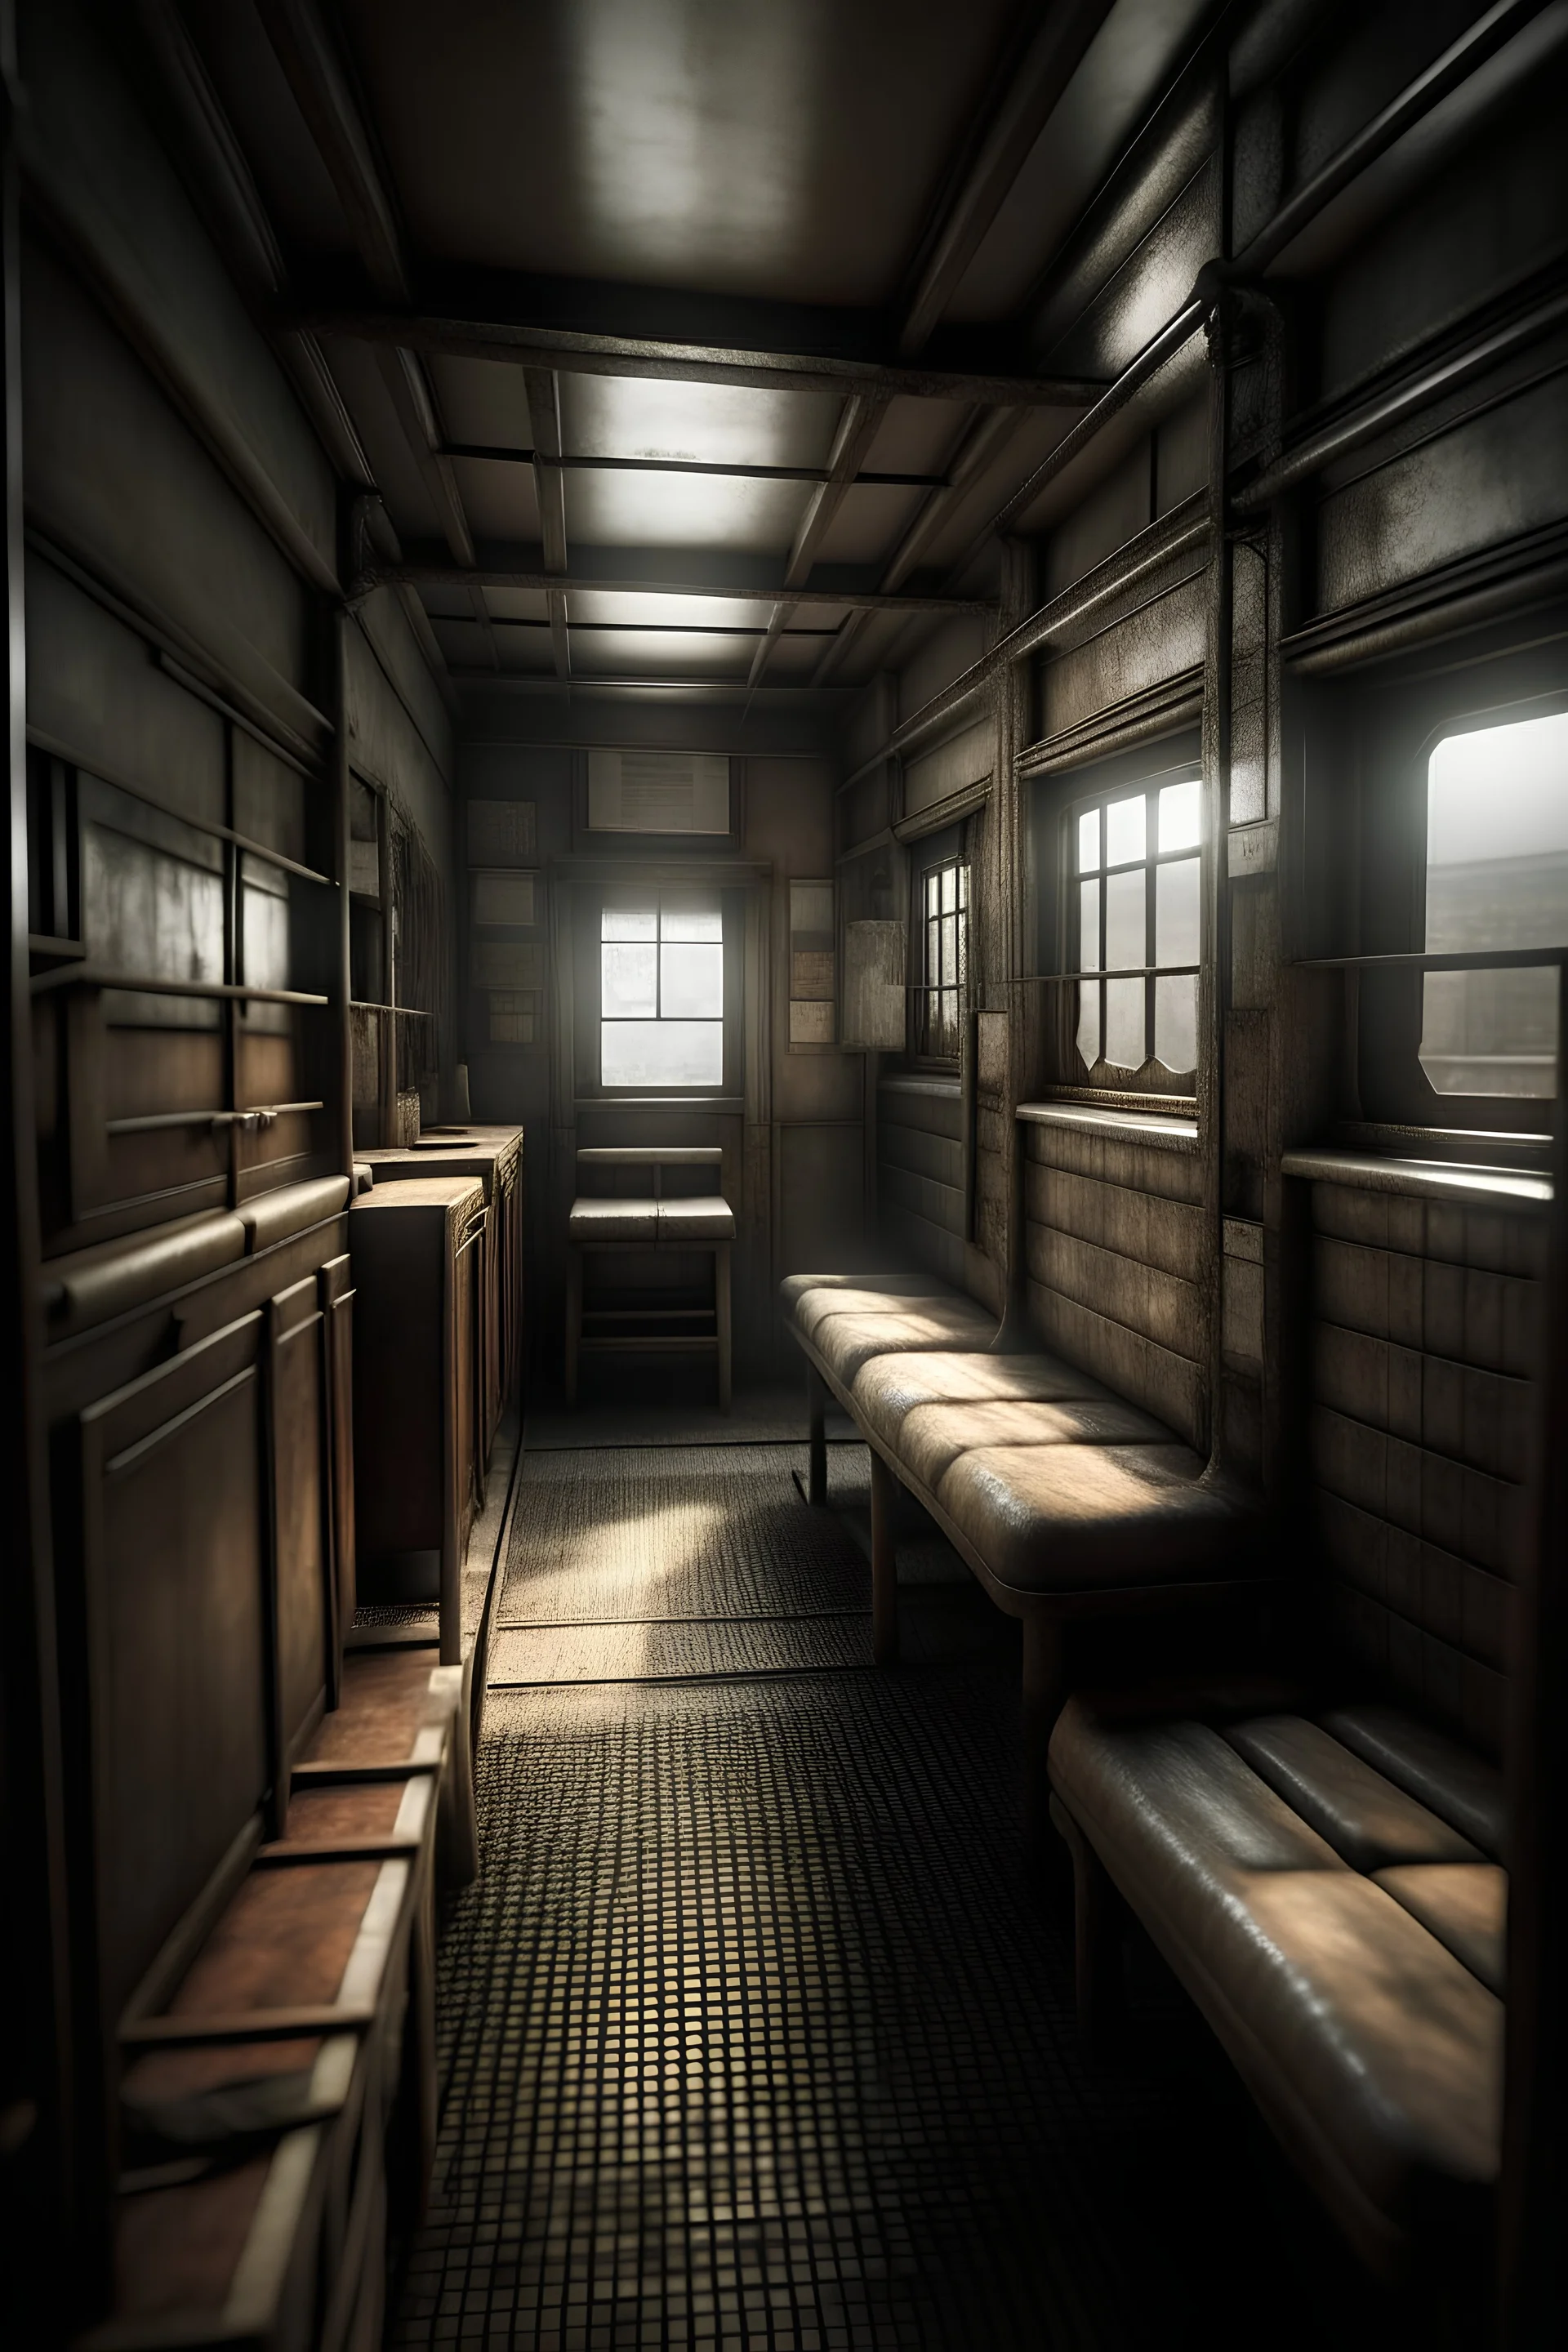 photo realistic depiction of a gulag prison transit train interior